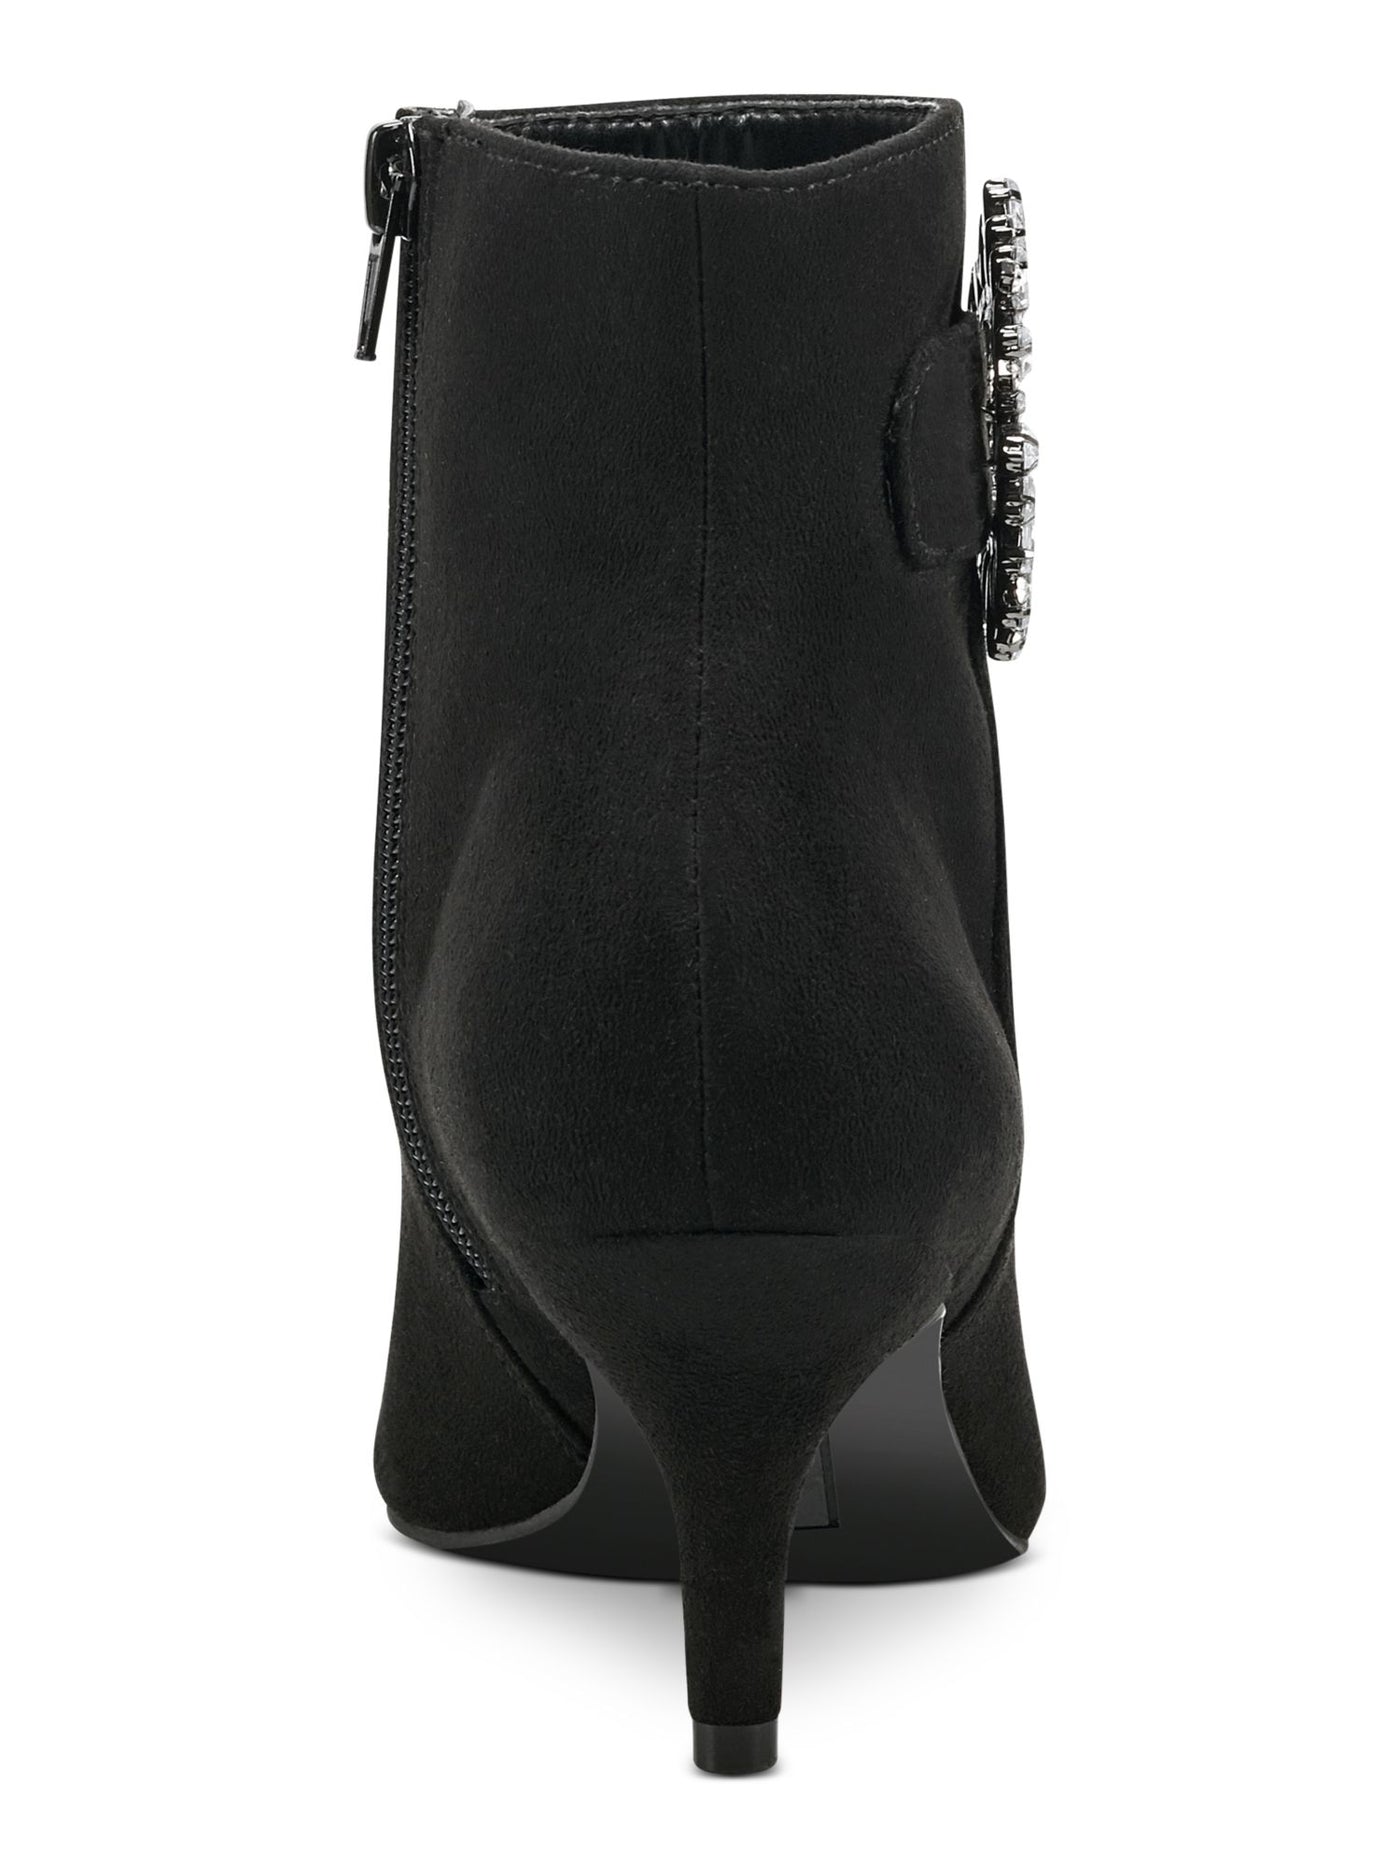 CHARTER CLUB Womens Black Embellished Comfort Crafta Pointed Toe Kitten Heel Zip-Up Booties 5 M